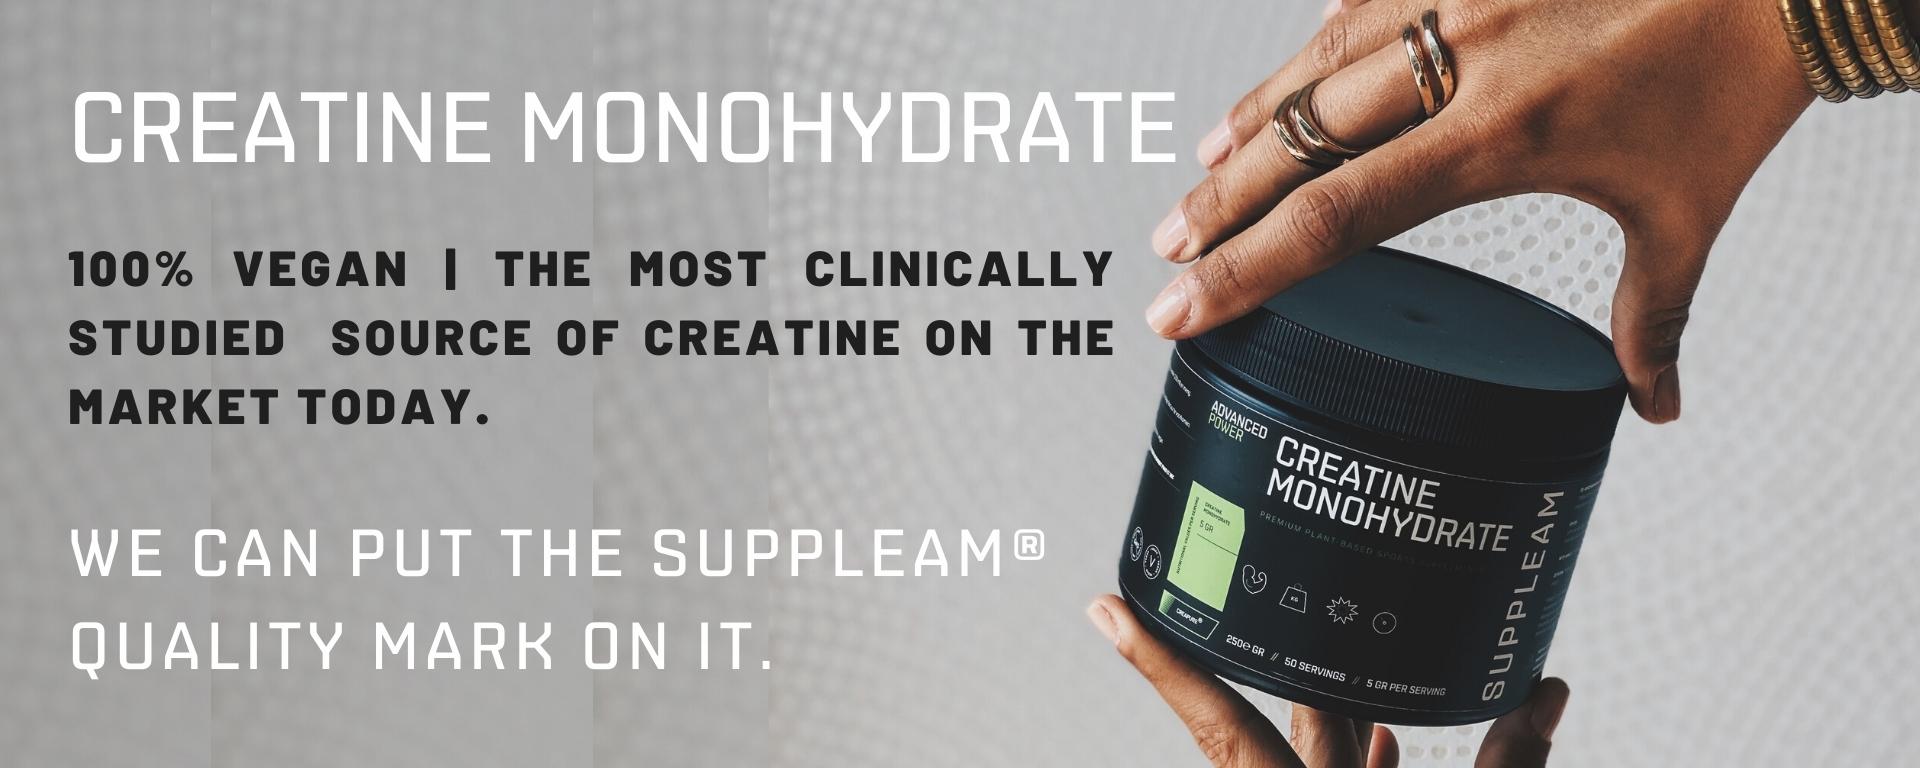 creatine monohydrate vegan